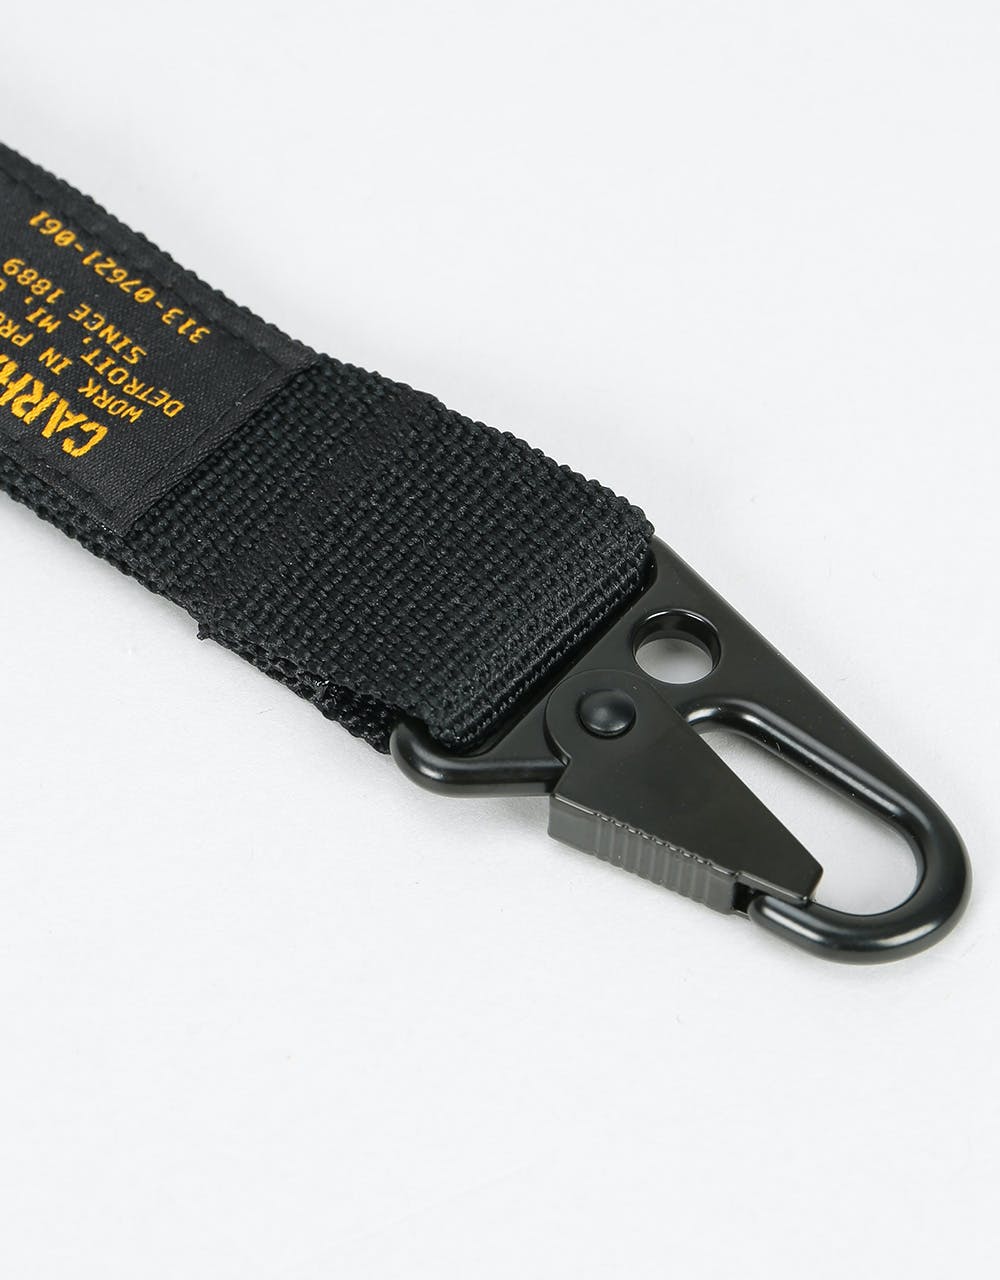 Carhartt WIP Military Key Chain Long - Black